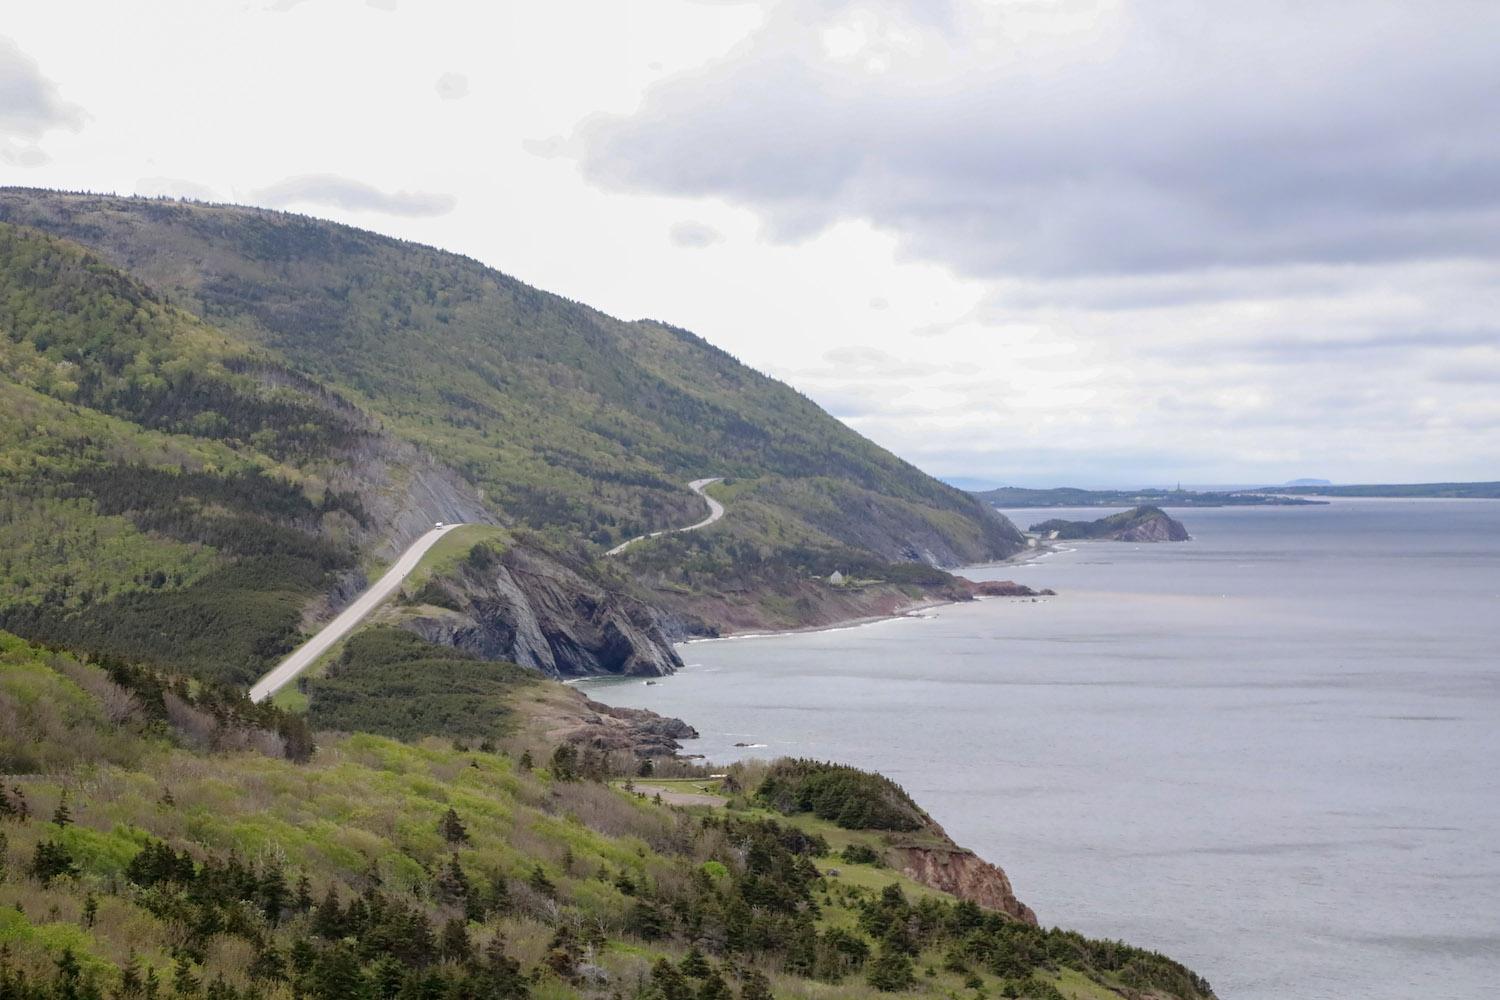 Parks across the Maritime provinces, including Cape Breton Highlands National Park, are preparing for Hurricane Lee.